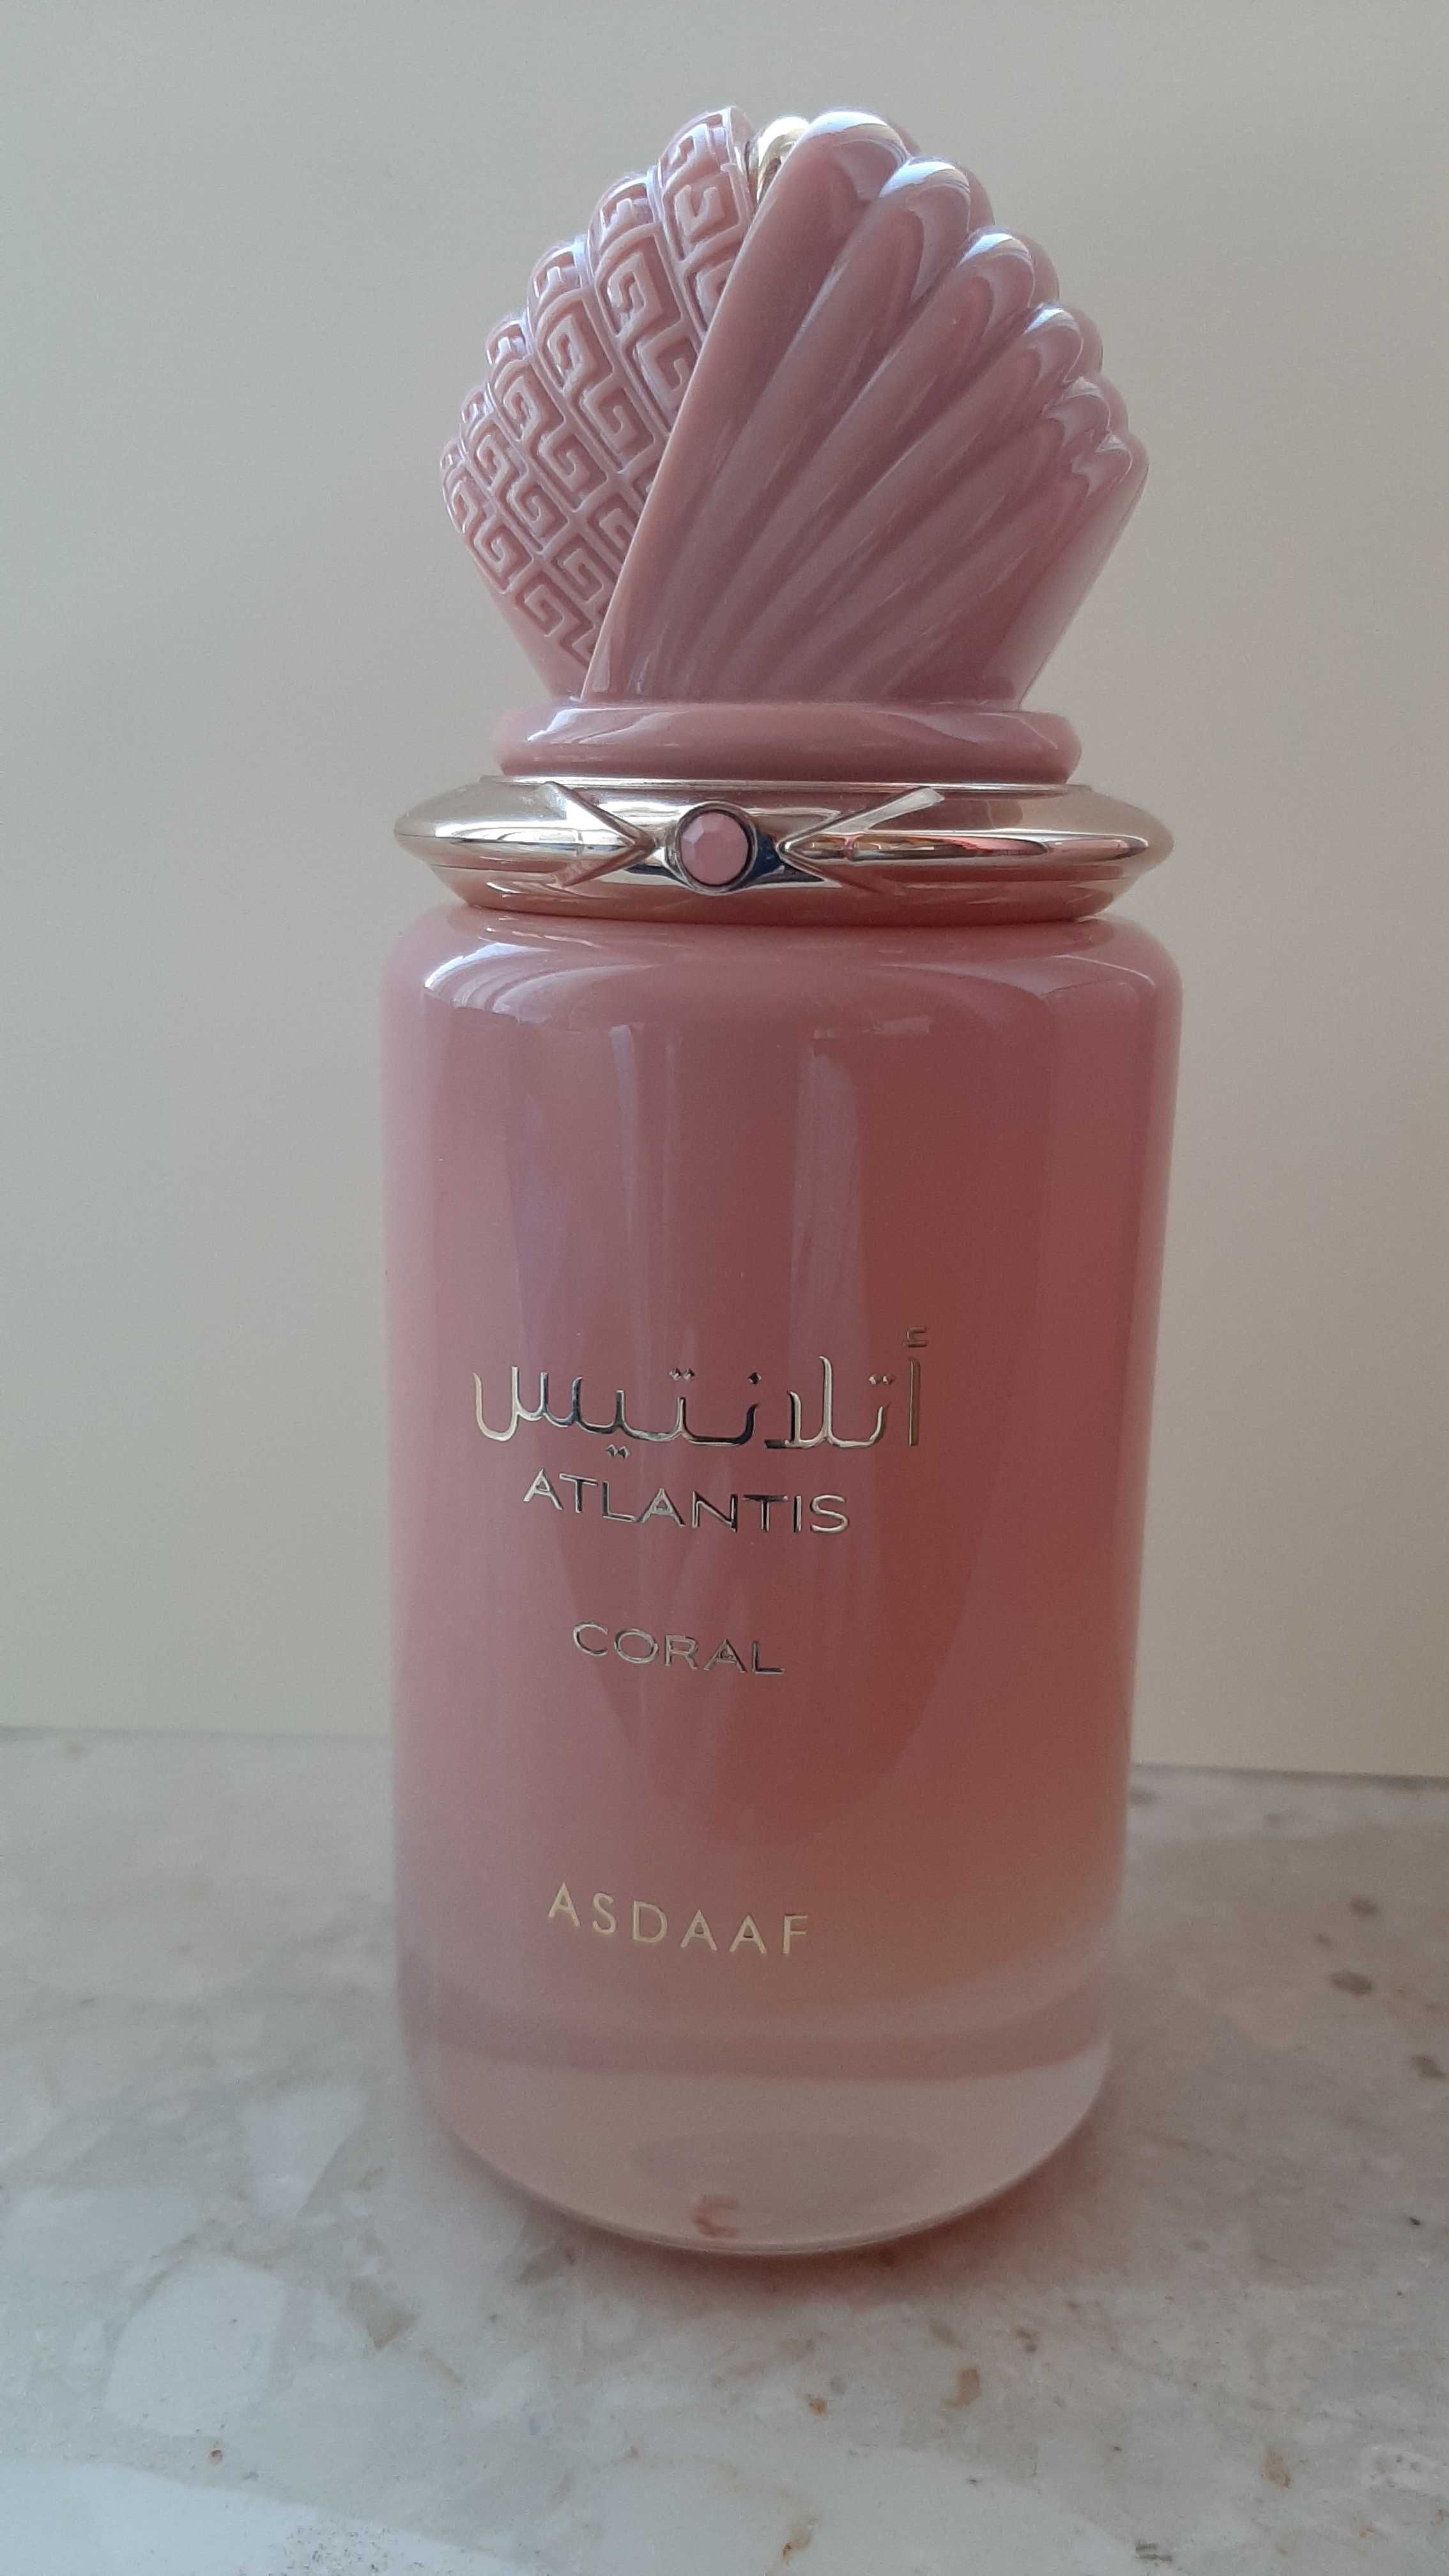 Perfumy Asdaaf Atlantis Coral Edp 100ml